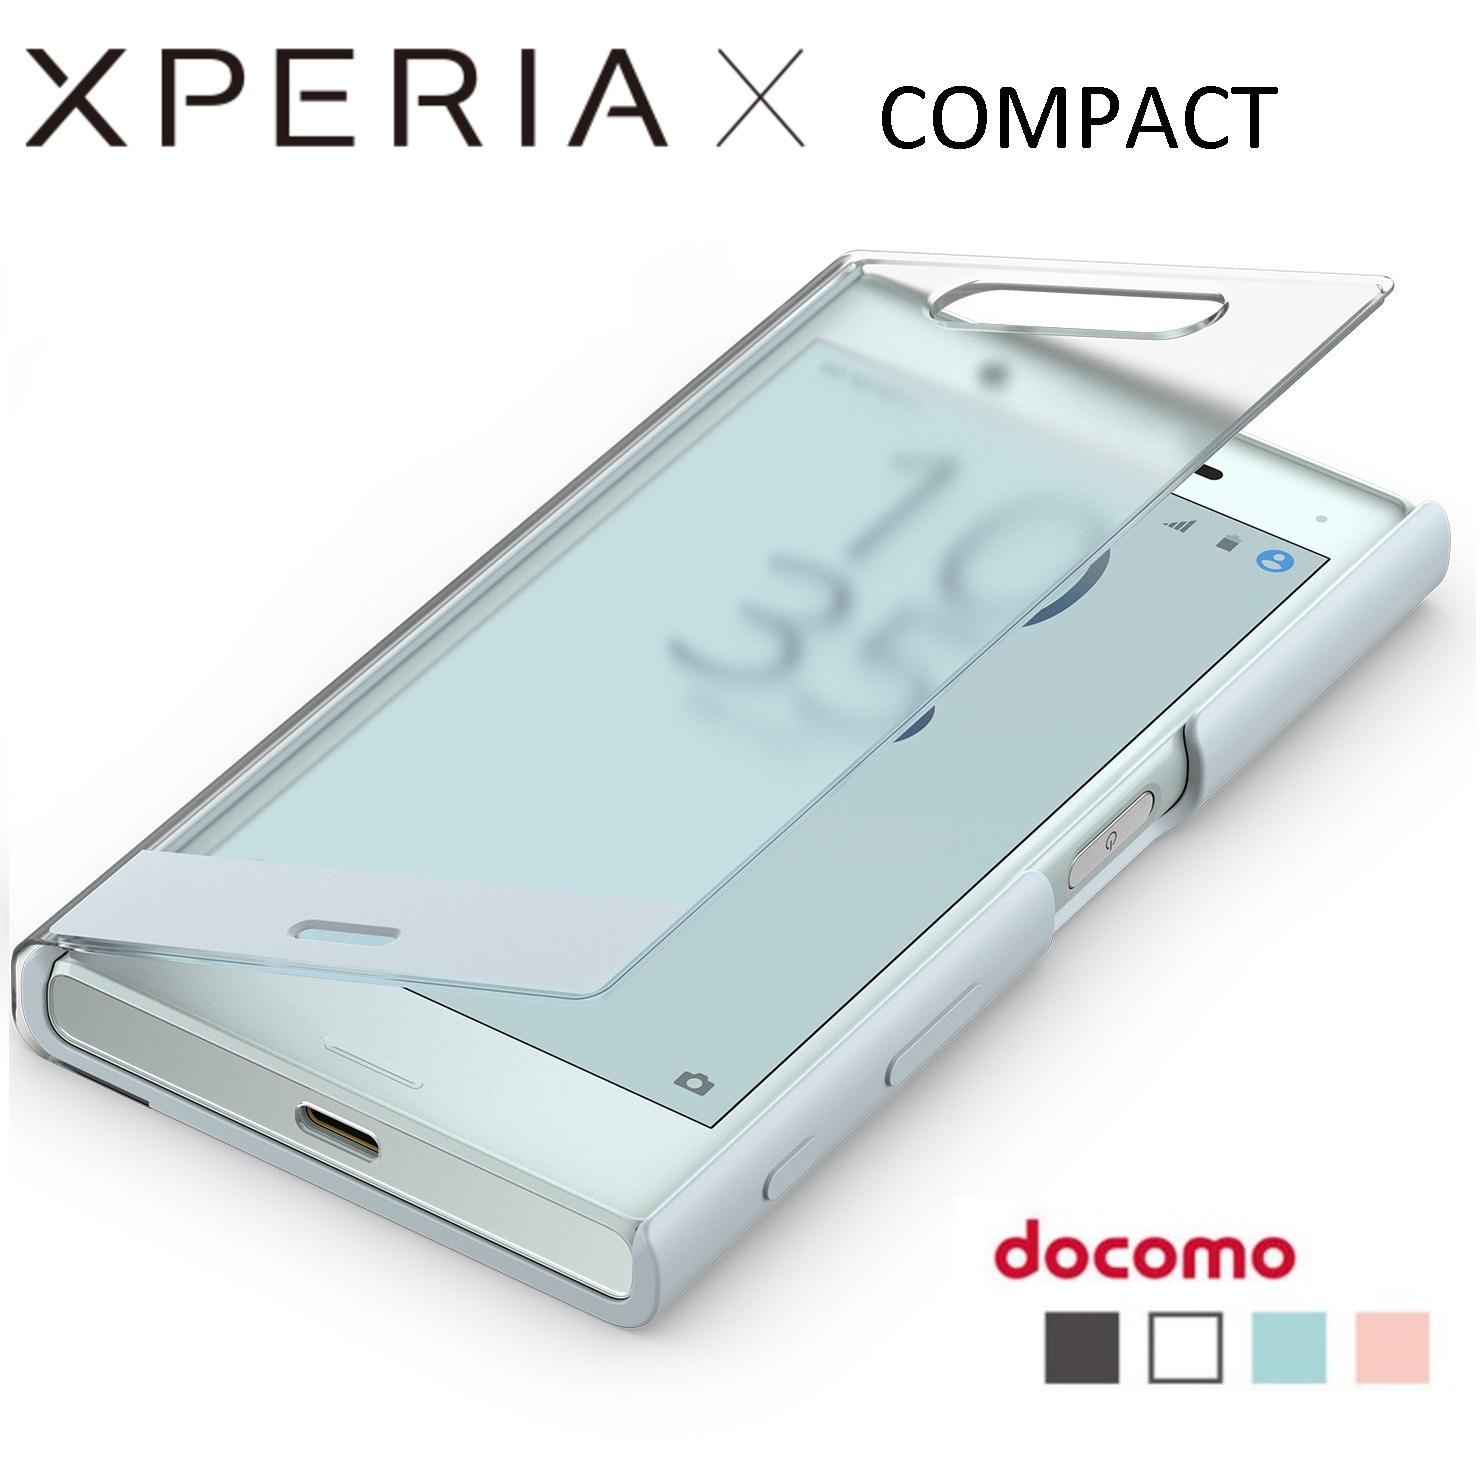 Sony xperia compact чехол. Чехол Sony scsf20 для Sony Xperia x Compact. Xperia x Compact. Sony x Compact Blue. Чехол Style Cover Touch sctf20 белый код 1319723.